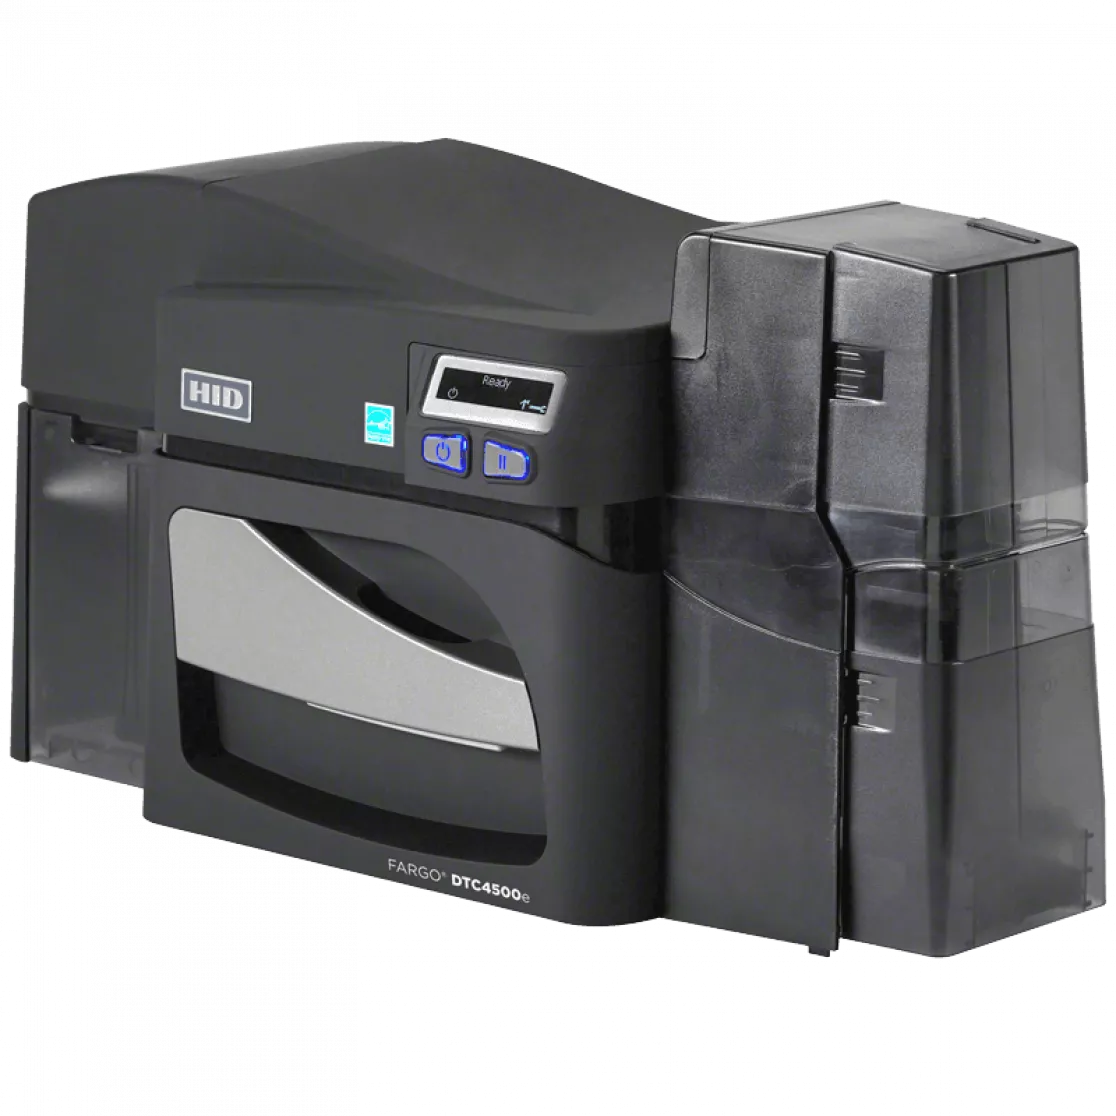 HID Fargo DTC4500e Duplex Card printer